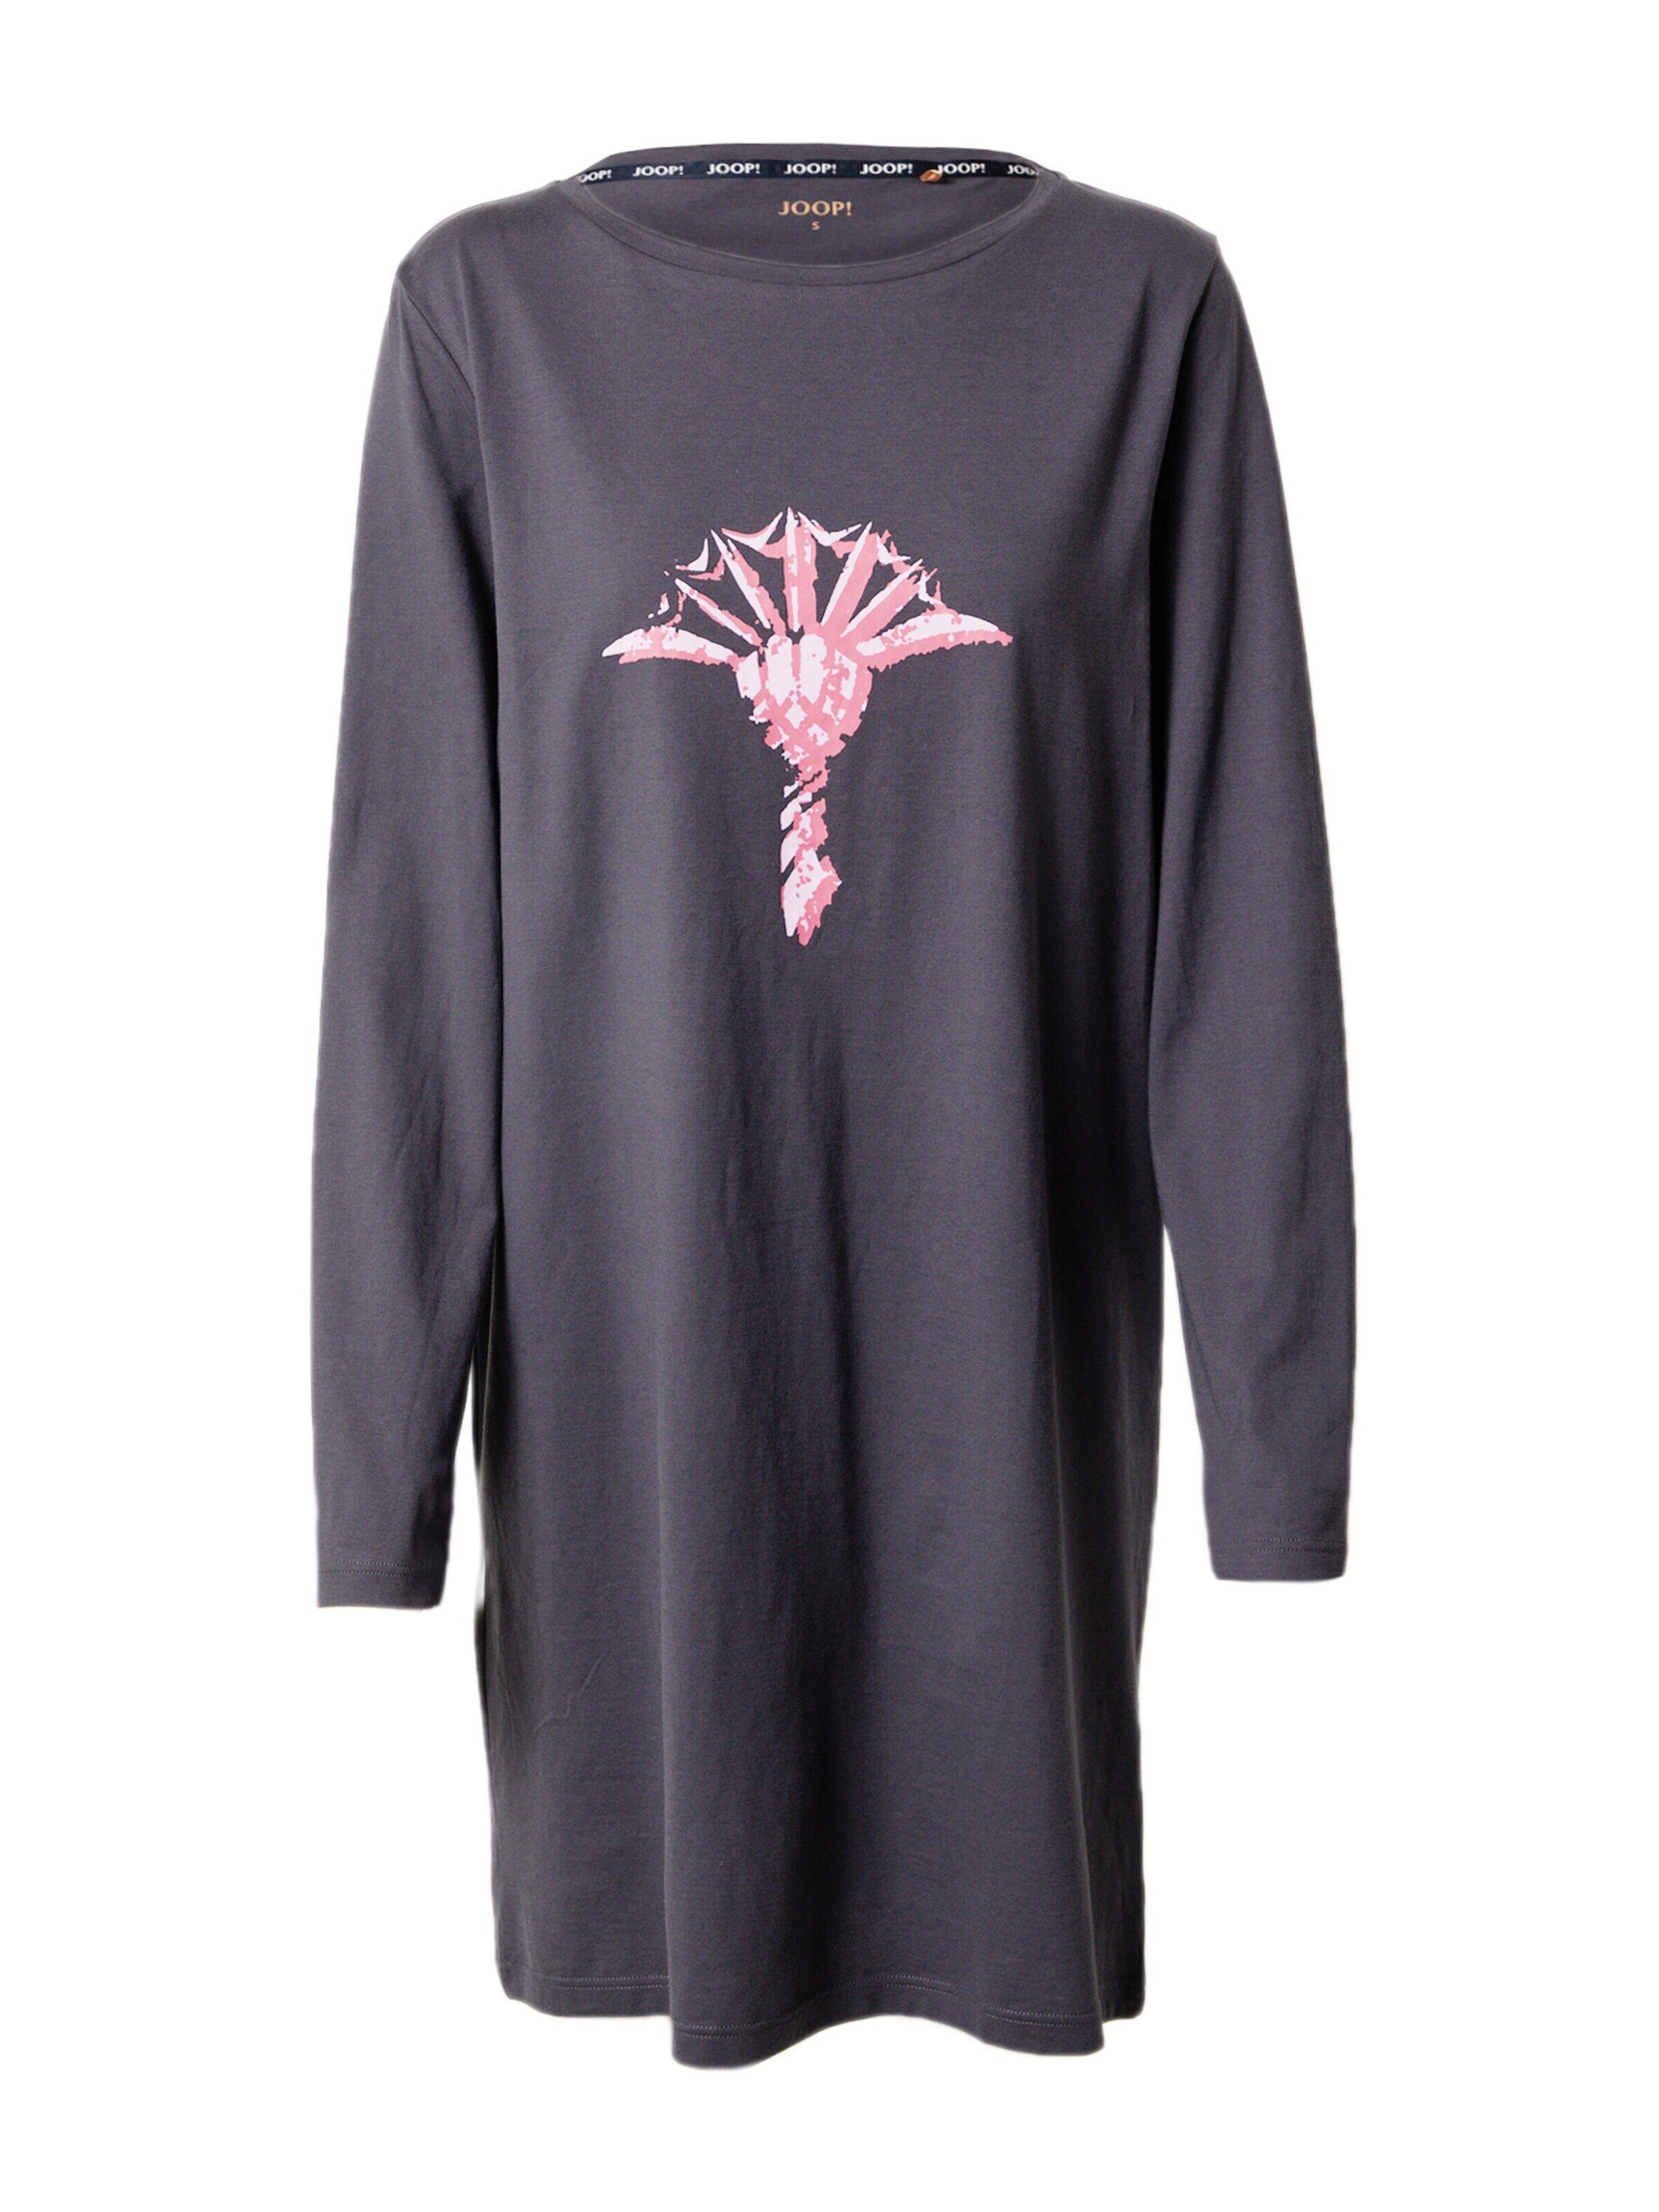 Material: Details Joop! Plain/ohne Grau/Rosa 100% Kimono, Baumwolle,